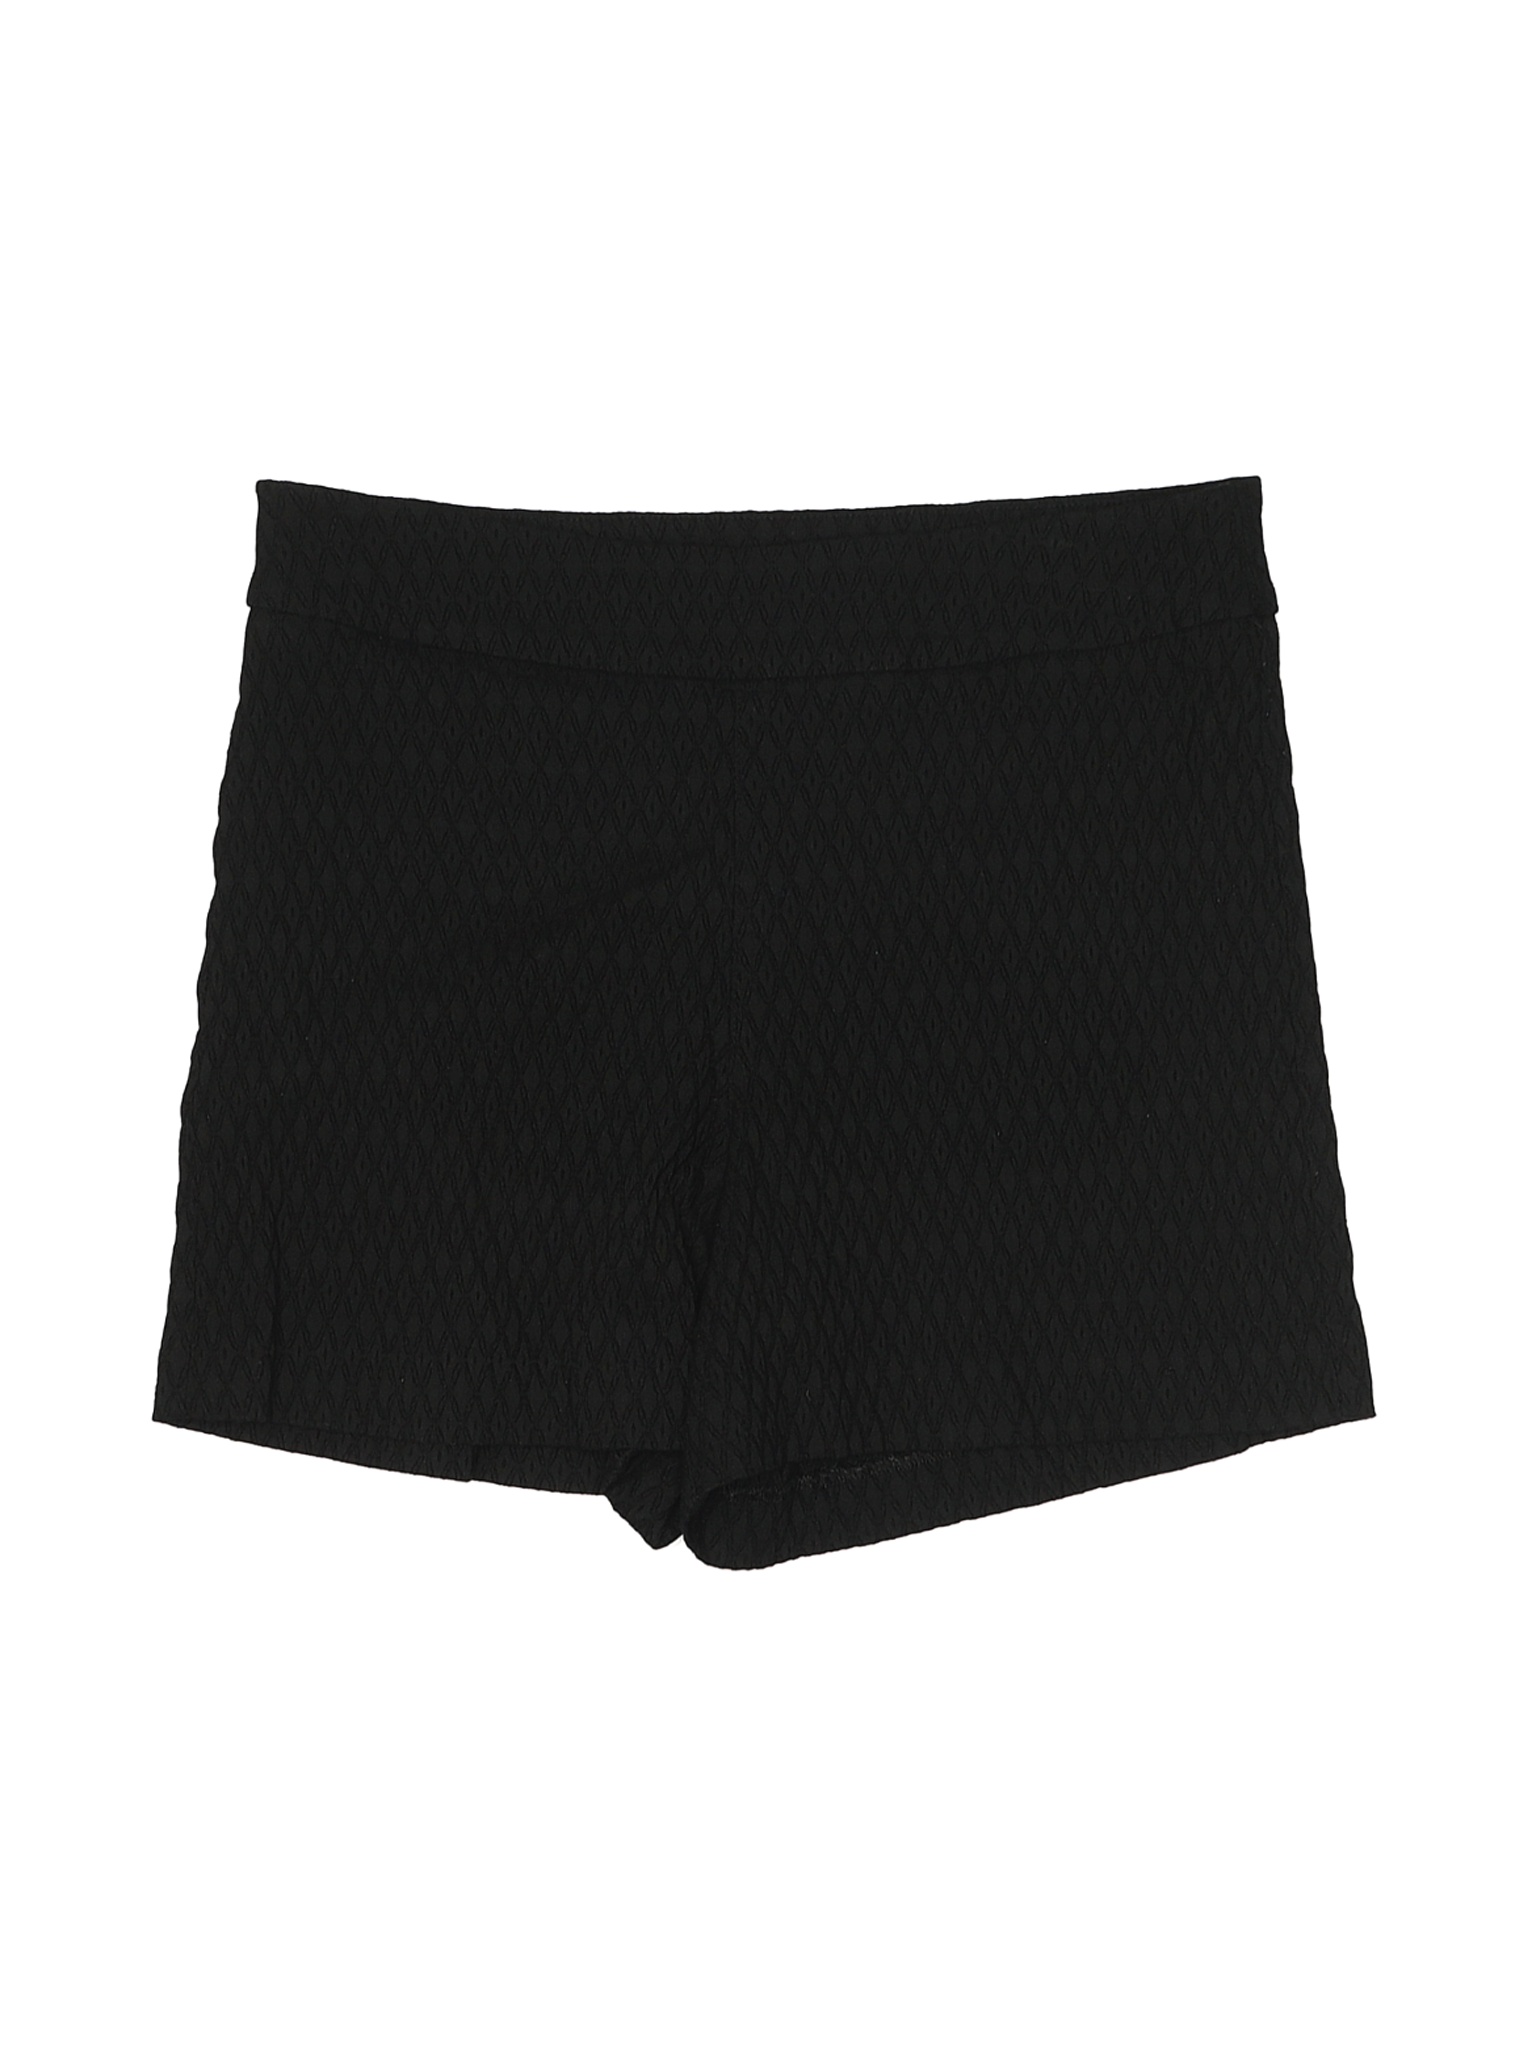 Margaret M Women Black Shorts L | eBay